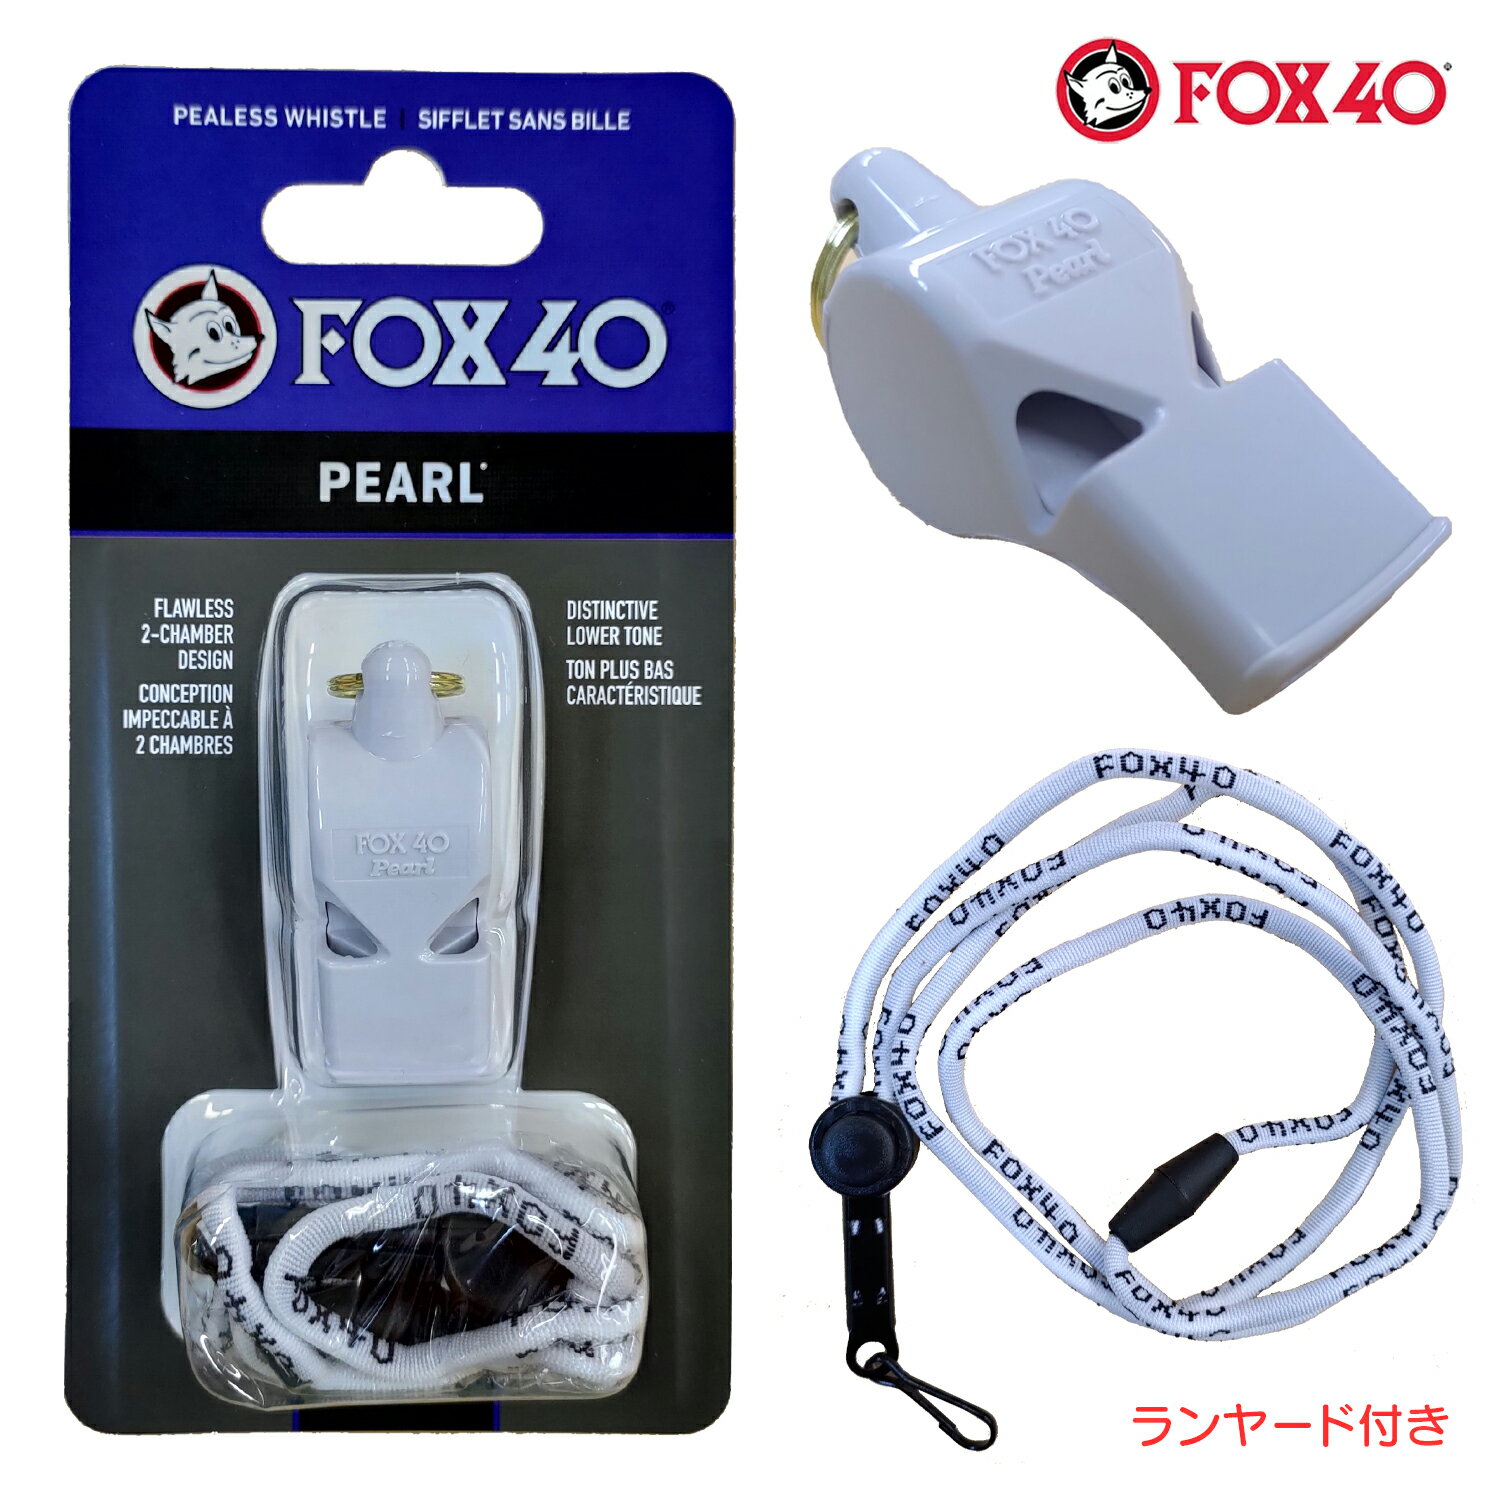 FOX40 フォックス40 Pearl ホイッスル 審判用 90db 色:ホワイト ランヤード付属 コルク玉不使用ピーレスタイプ made in Canada